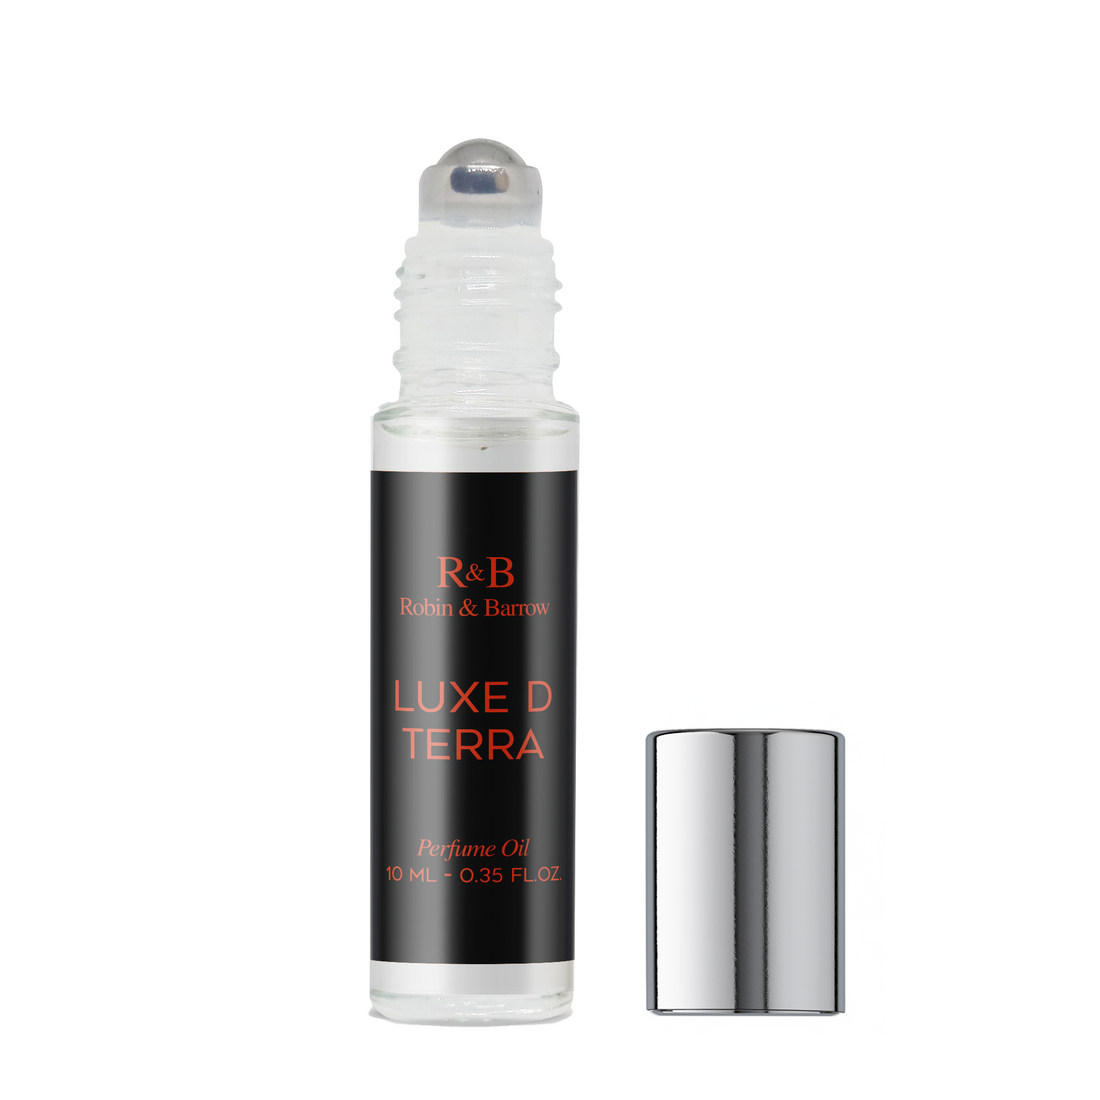 Luxe D Terra - Perfume Oil